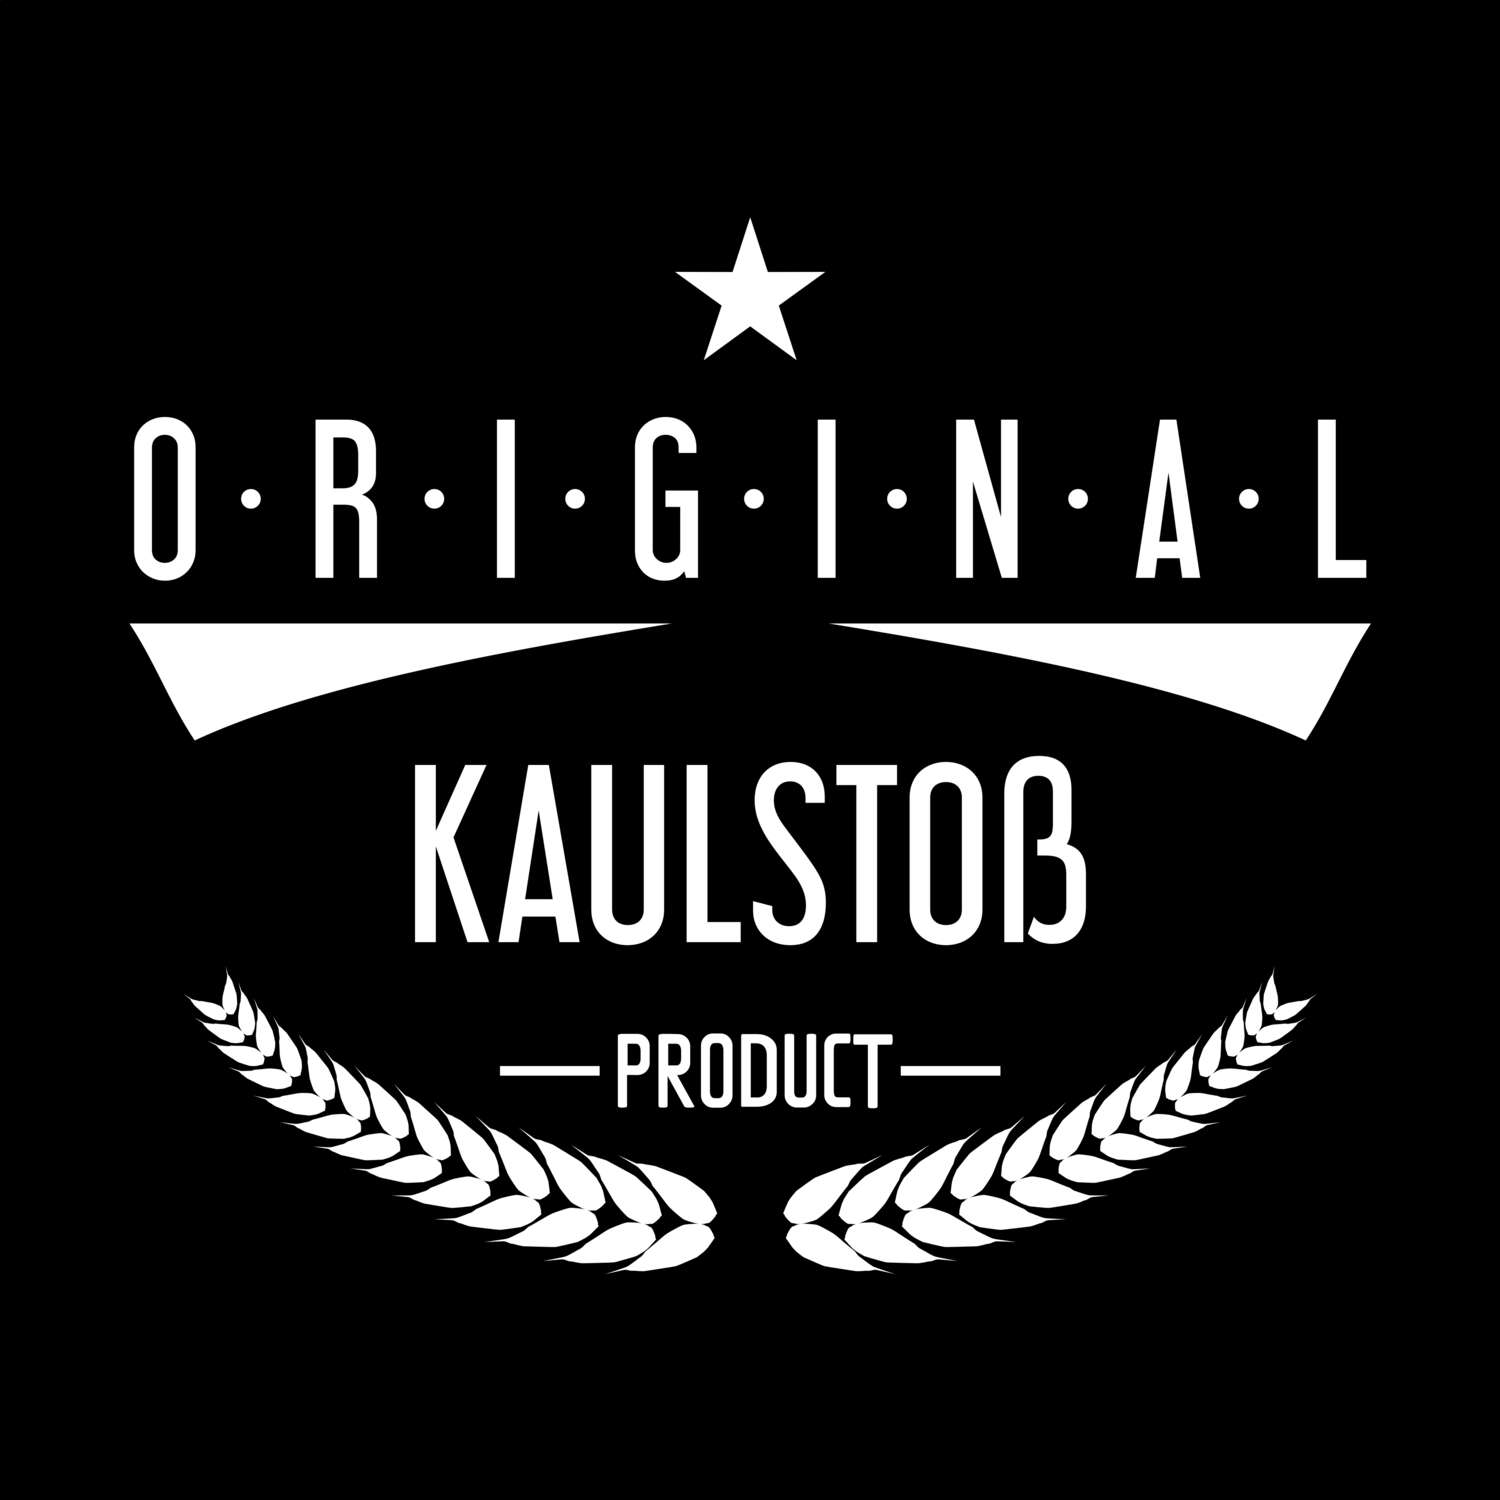 Kaulstoß T-Shirt »Original Product«